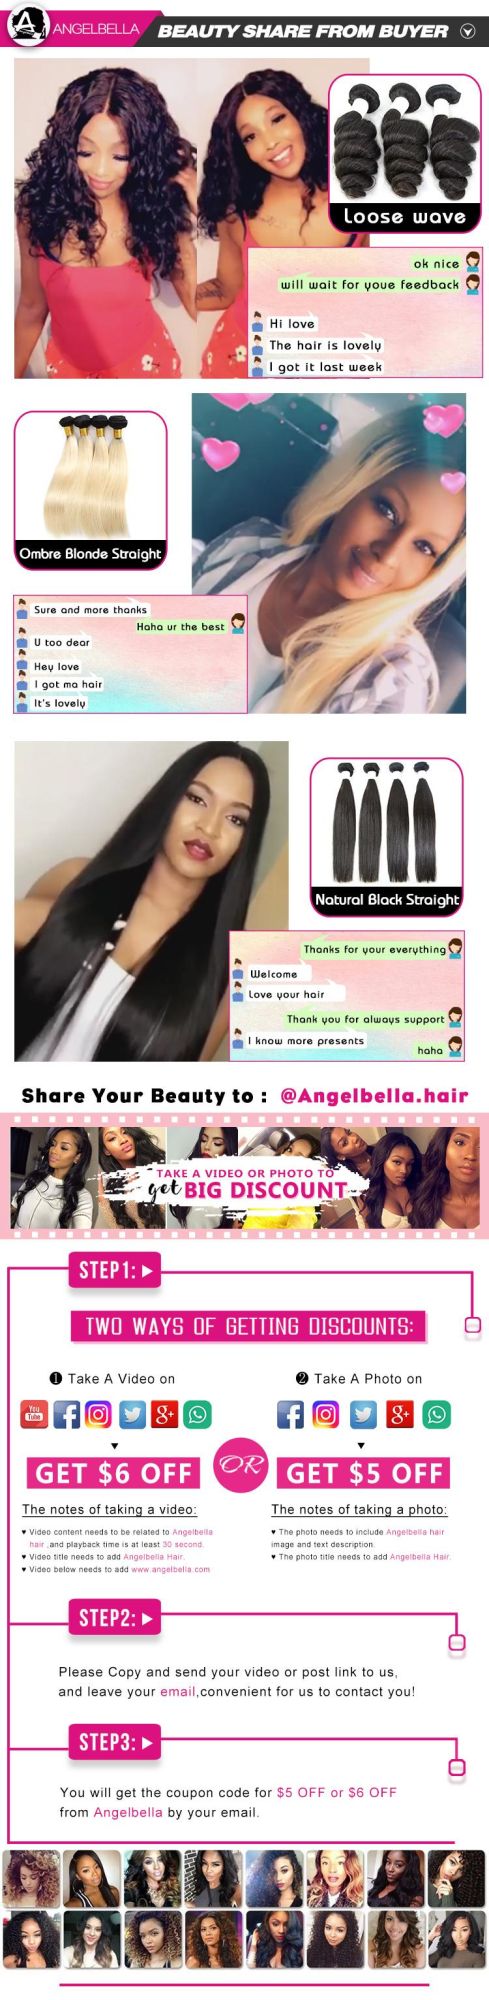 Angelbella Indian Lace Closures Silky Straight Virgin Hair Closures